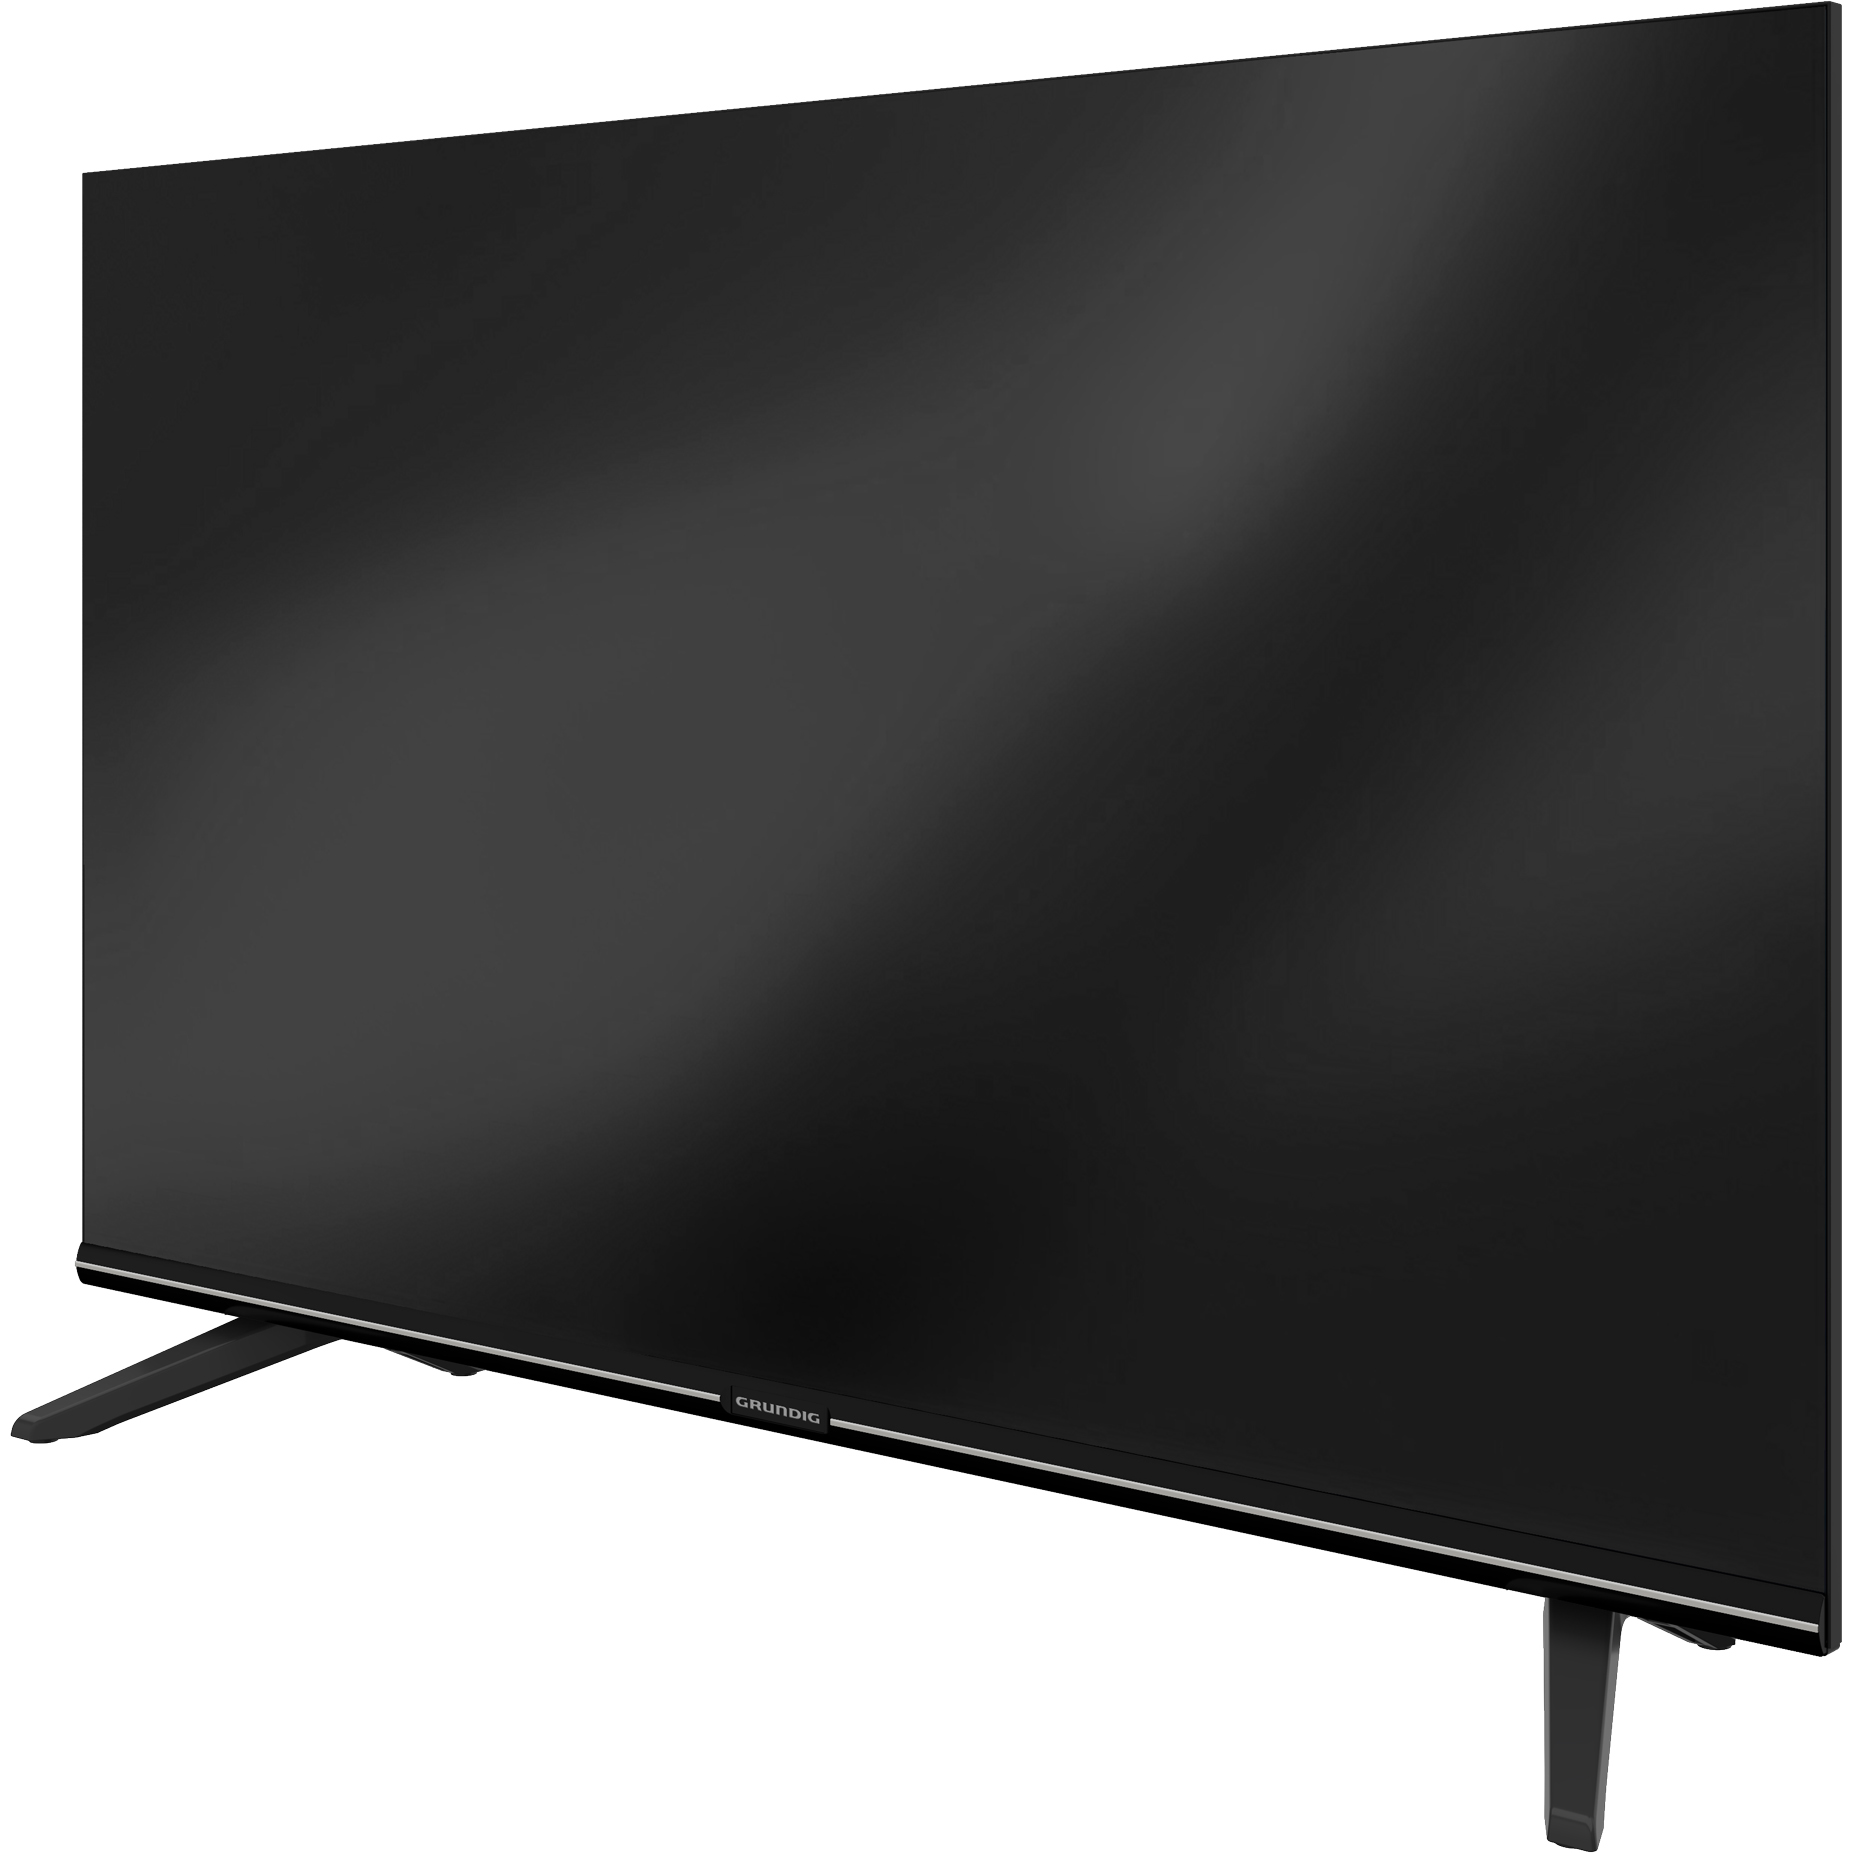 Телевизор Grundig 40GGF6900B, цвет черный - фото 4